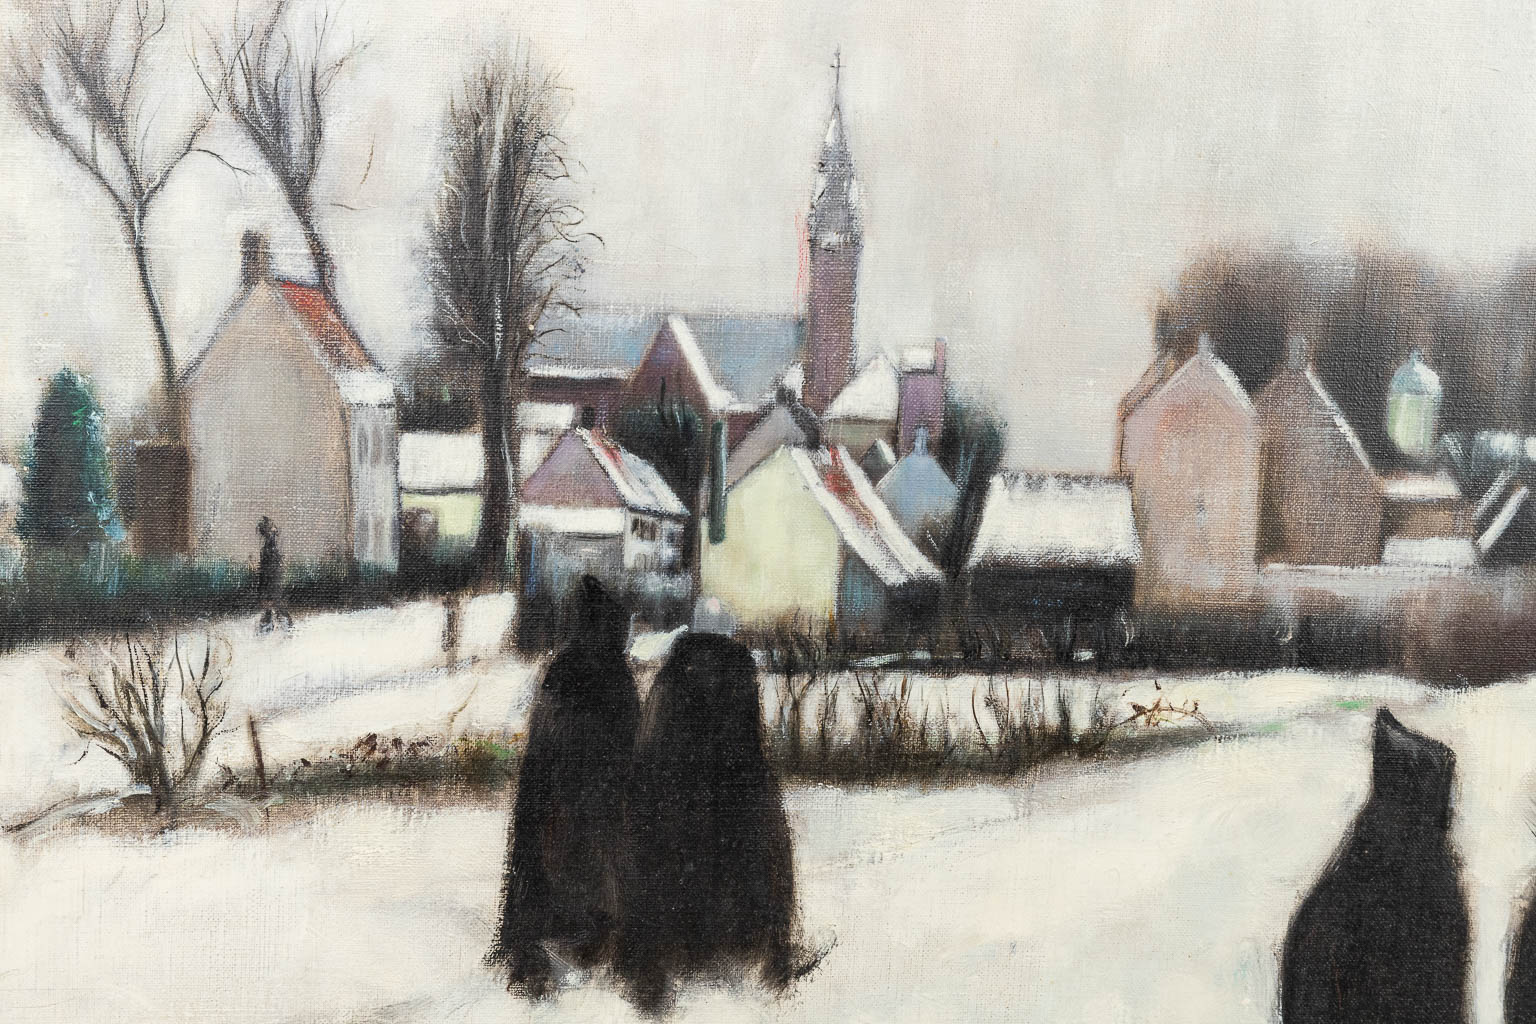 Jacques LE MAIR (1905-1990) 'Winter te Sint-Michiels' a painting of Bruges, oil on canvas. (80 x 74 cm)